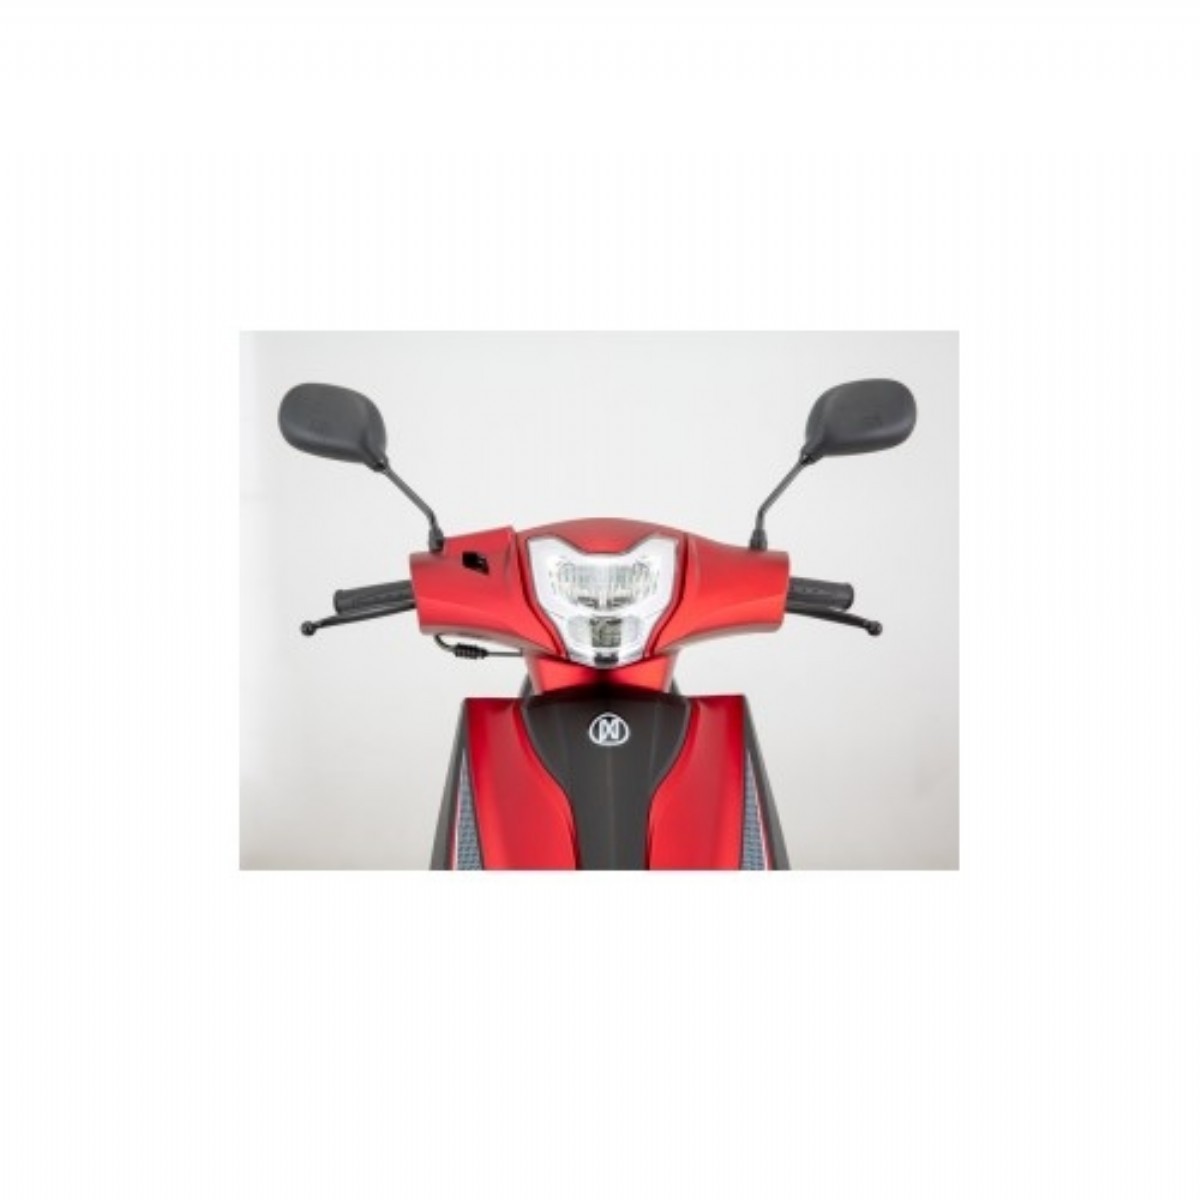 Motosikletler | Mondial 50 Loyal i Motosiklet Kırmızı | M3MON1055A0001 | Mondial 50 Loyal i Motorsiklet Kırmızı, Mondial 50 Loyal, Mondial 50 Loyal i Motorsiklet Kırmızı motor motorsiklet | 